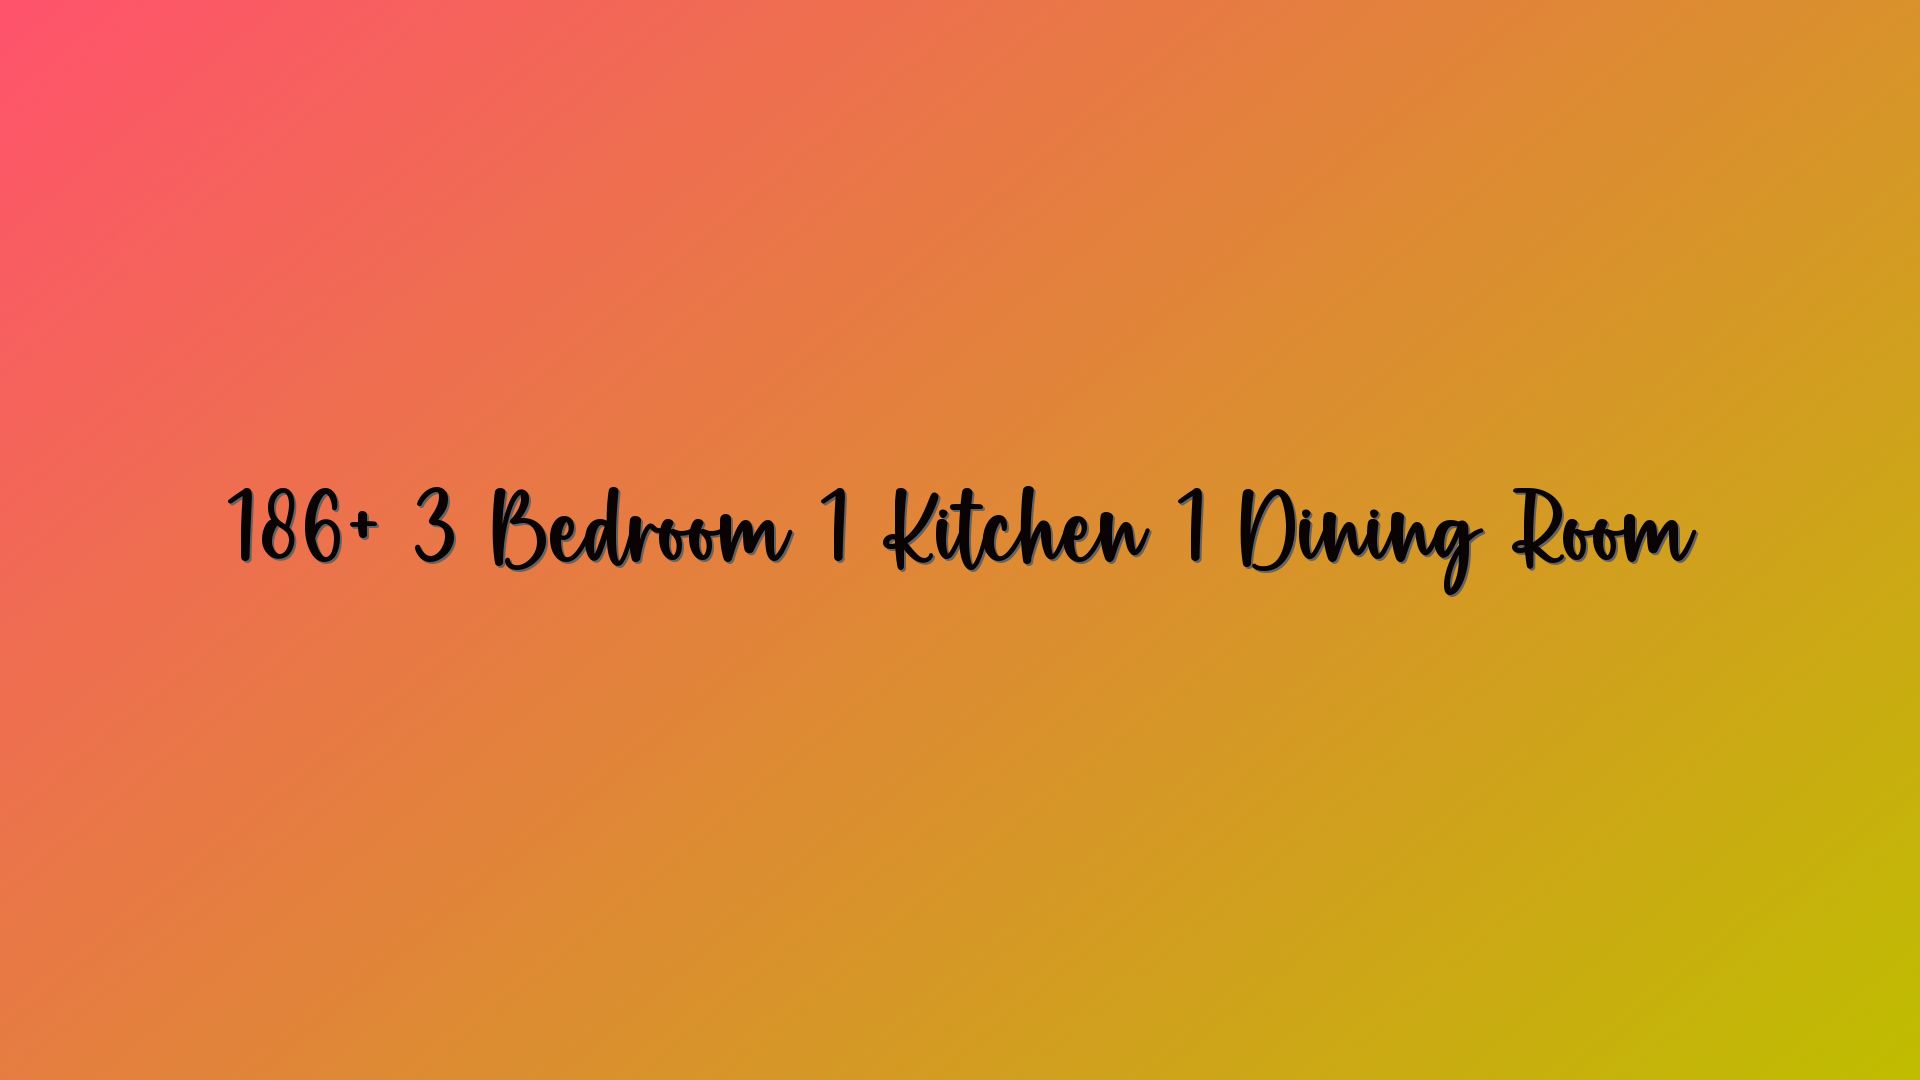 186+ 3 Bedroom 1 Kitchen 1 Dining Room